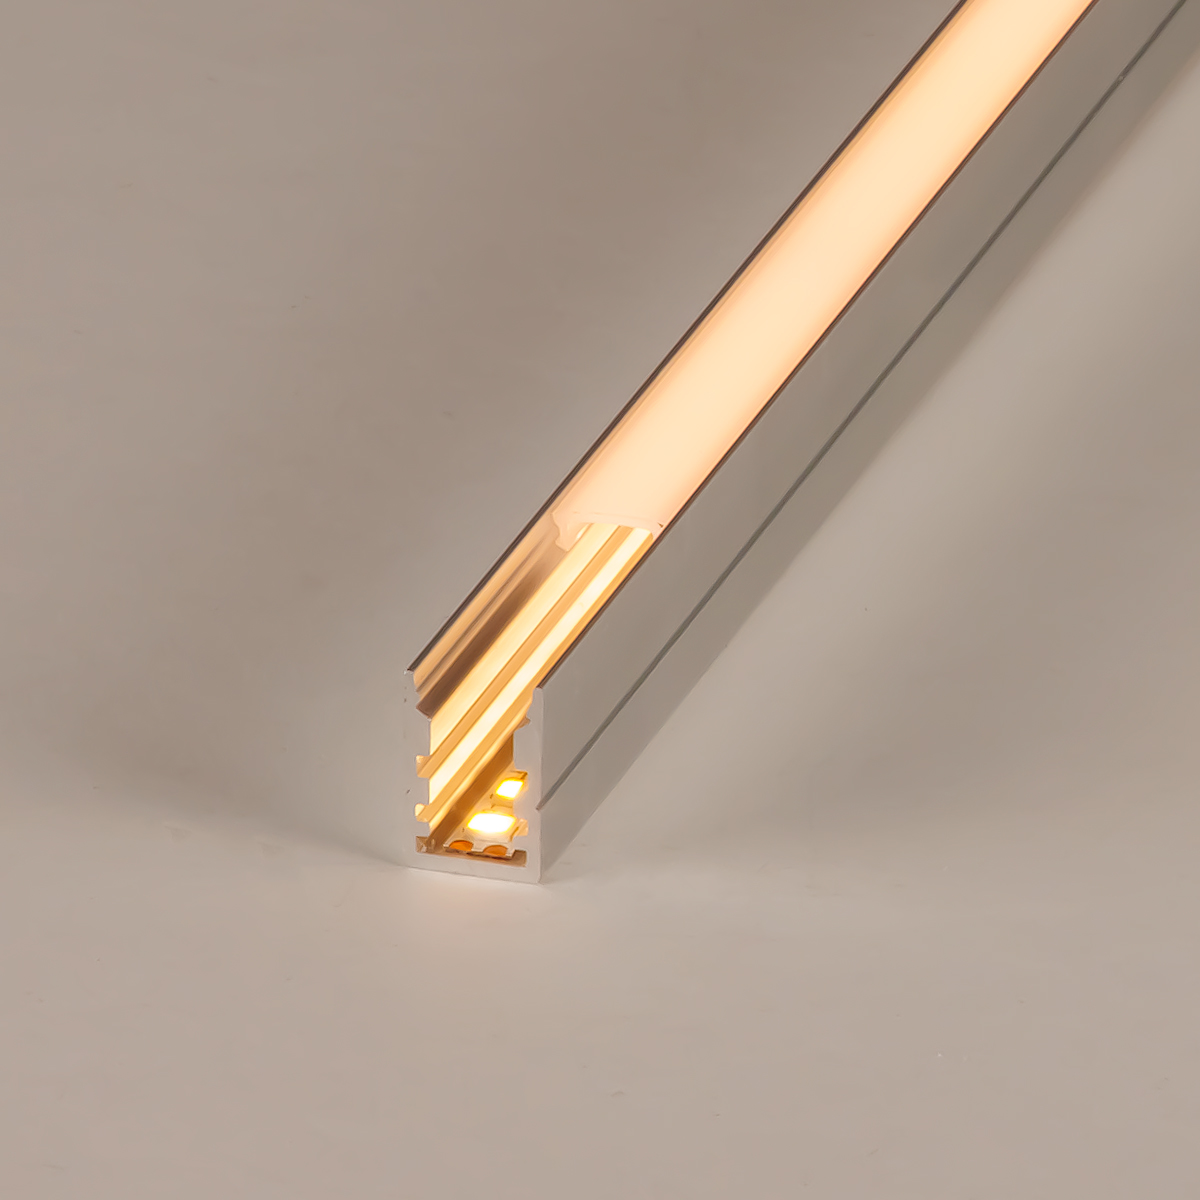 LED Aufbau U-Profil eloxiert 10 x 15mm opal 200cm